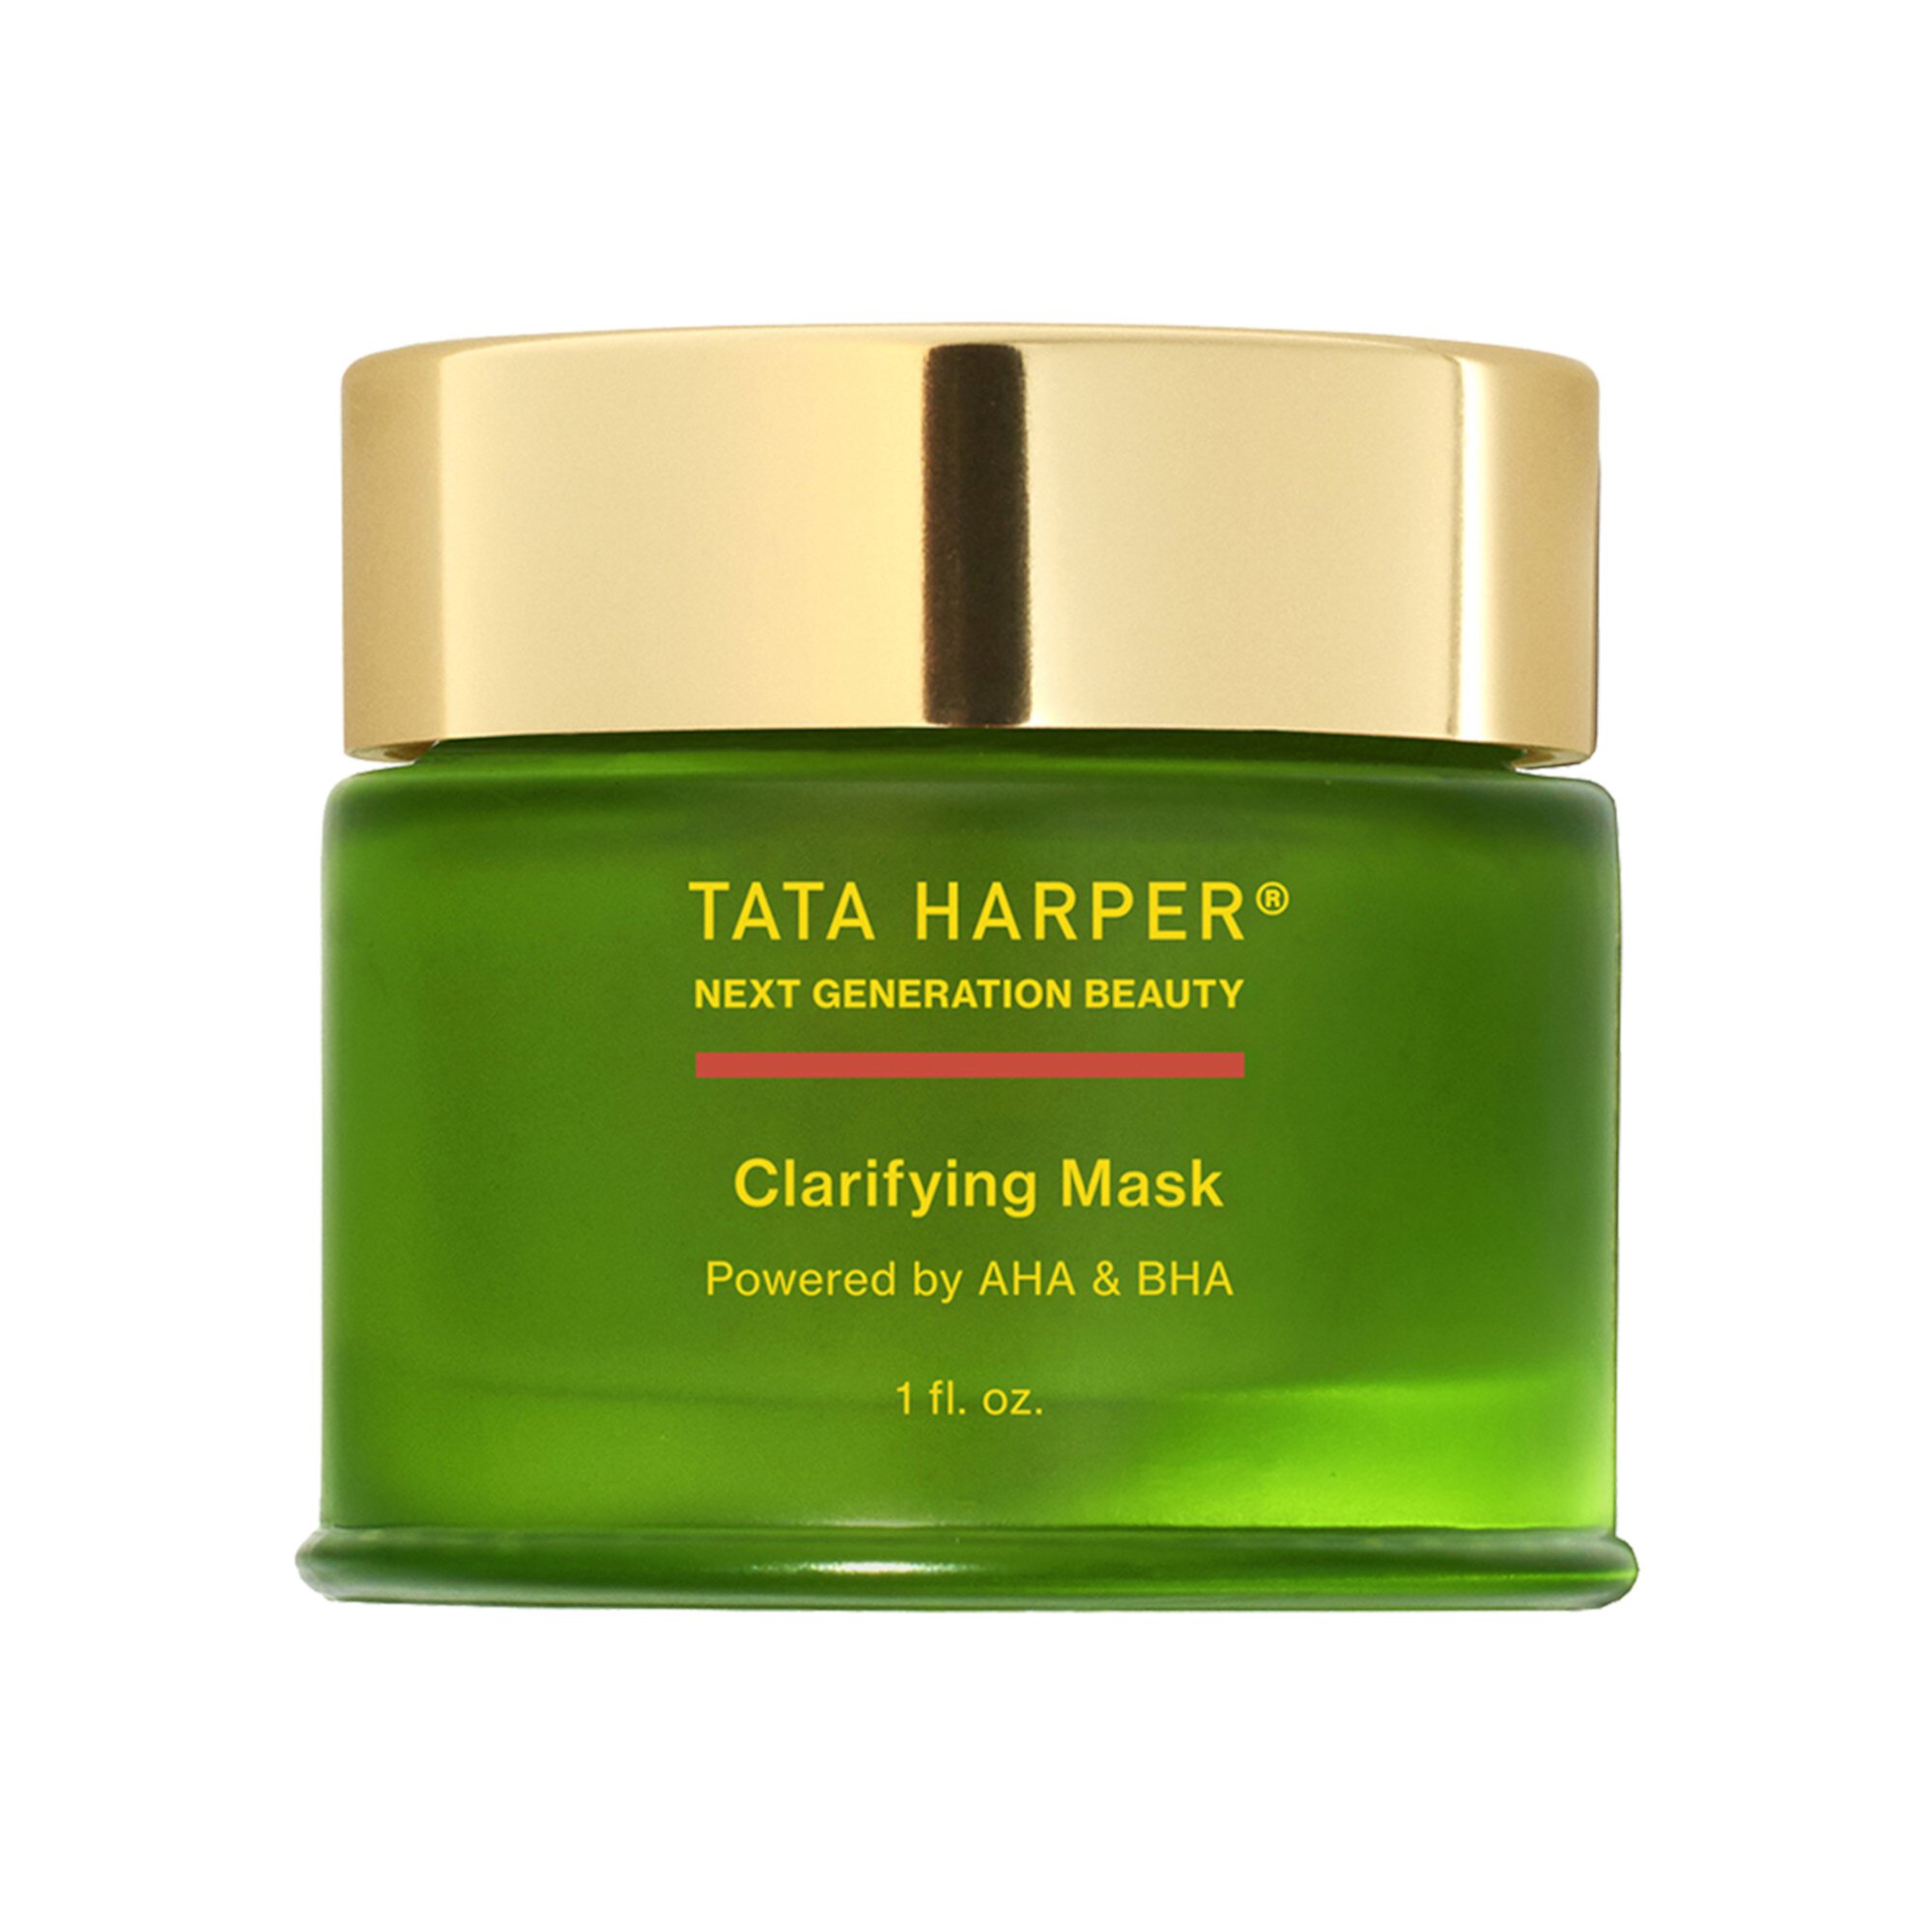 Осветляющая поровая маска AHA + BHA с салициловой кислотой от покраснений Tata Harper